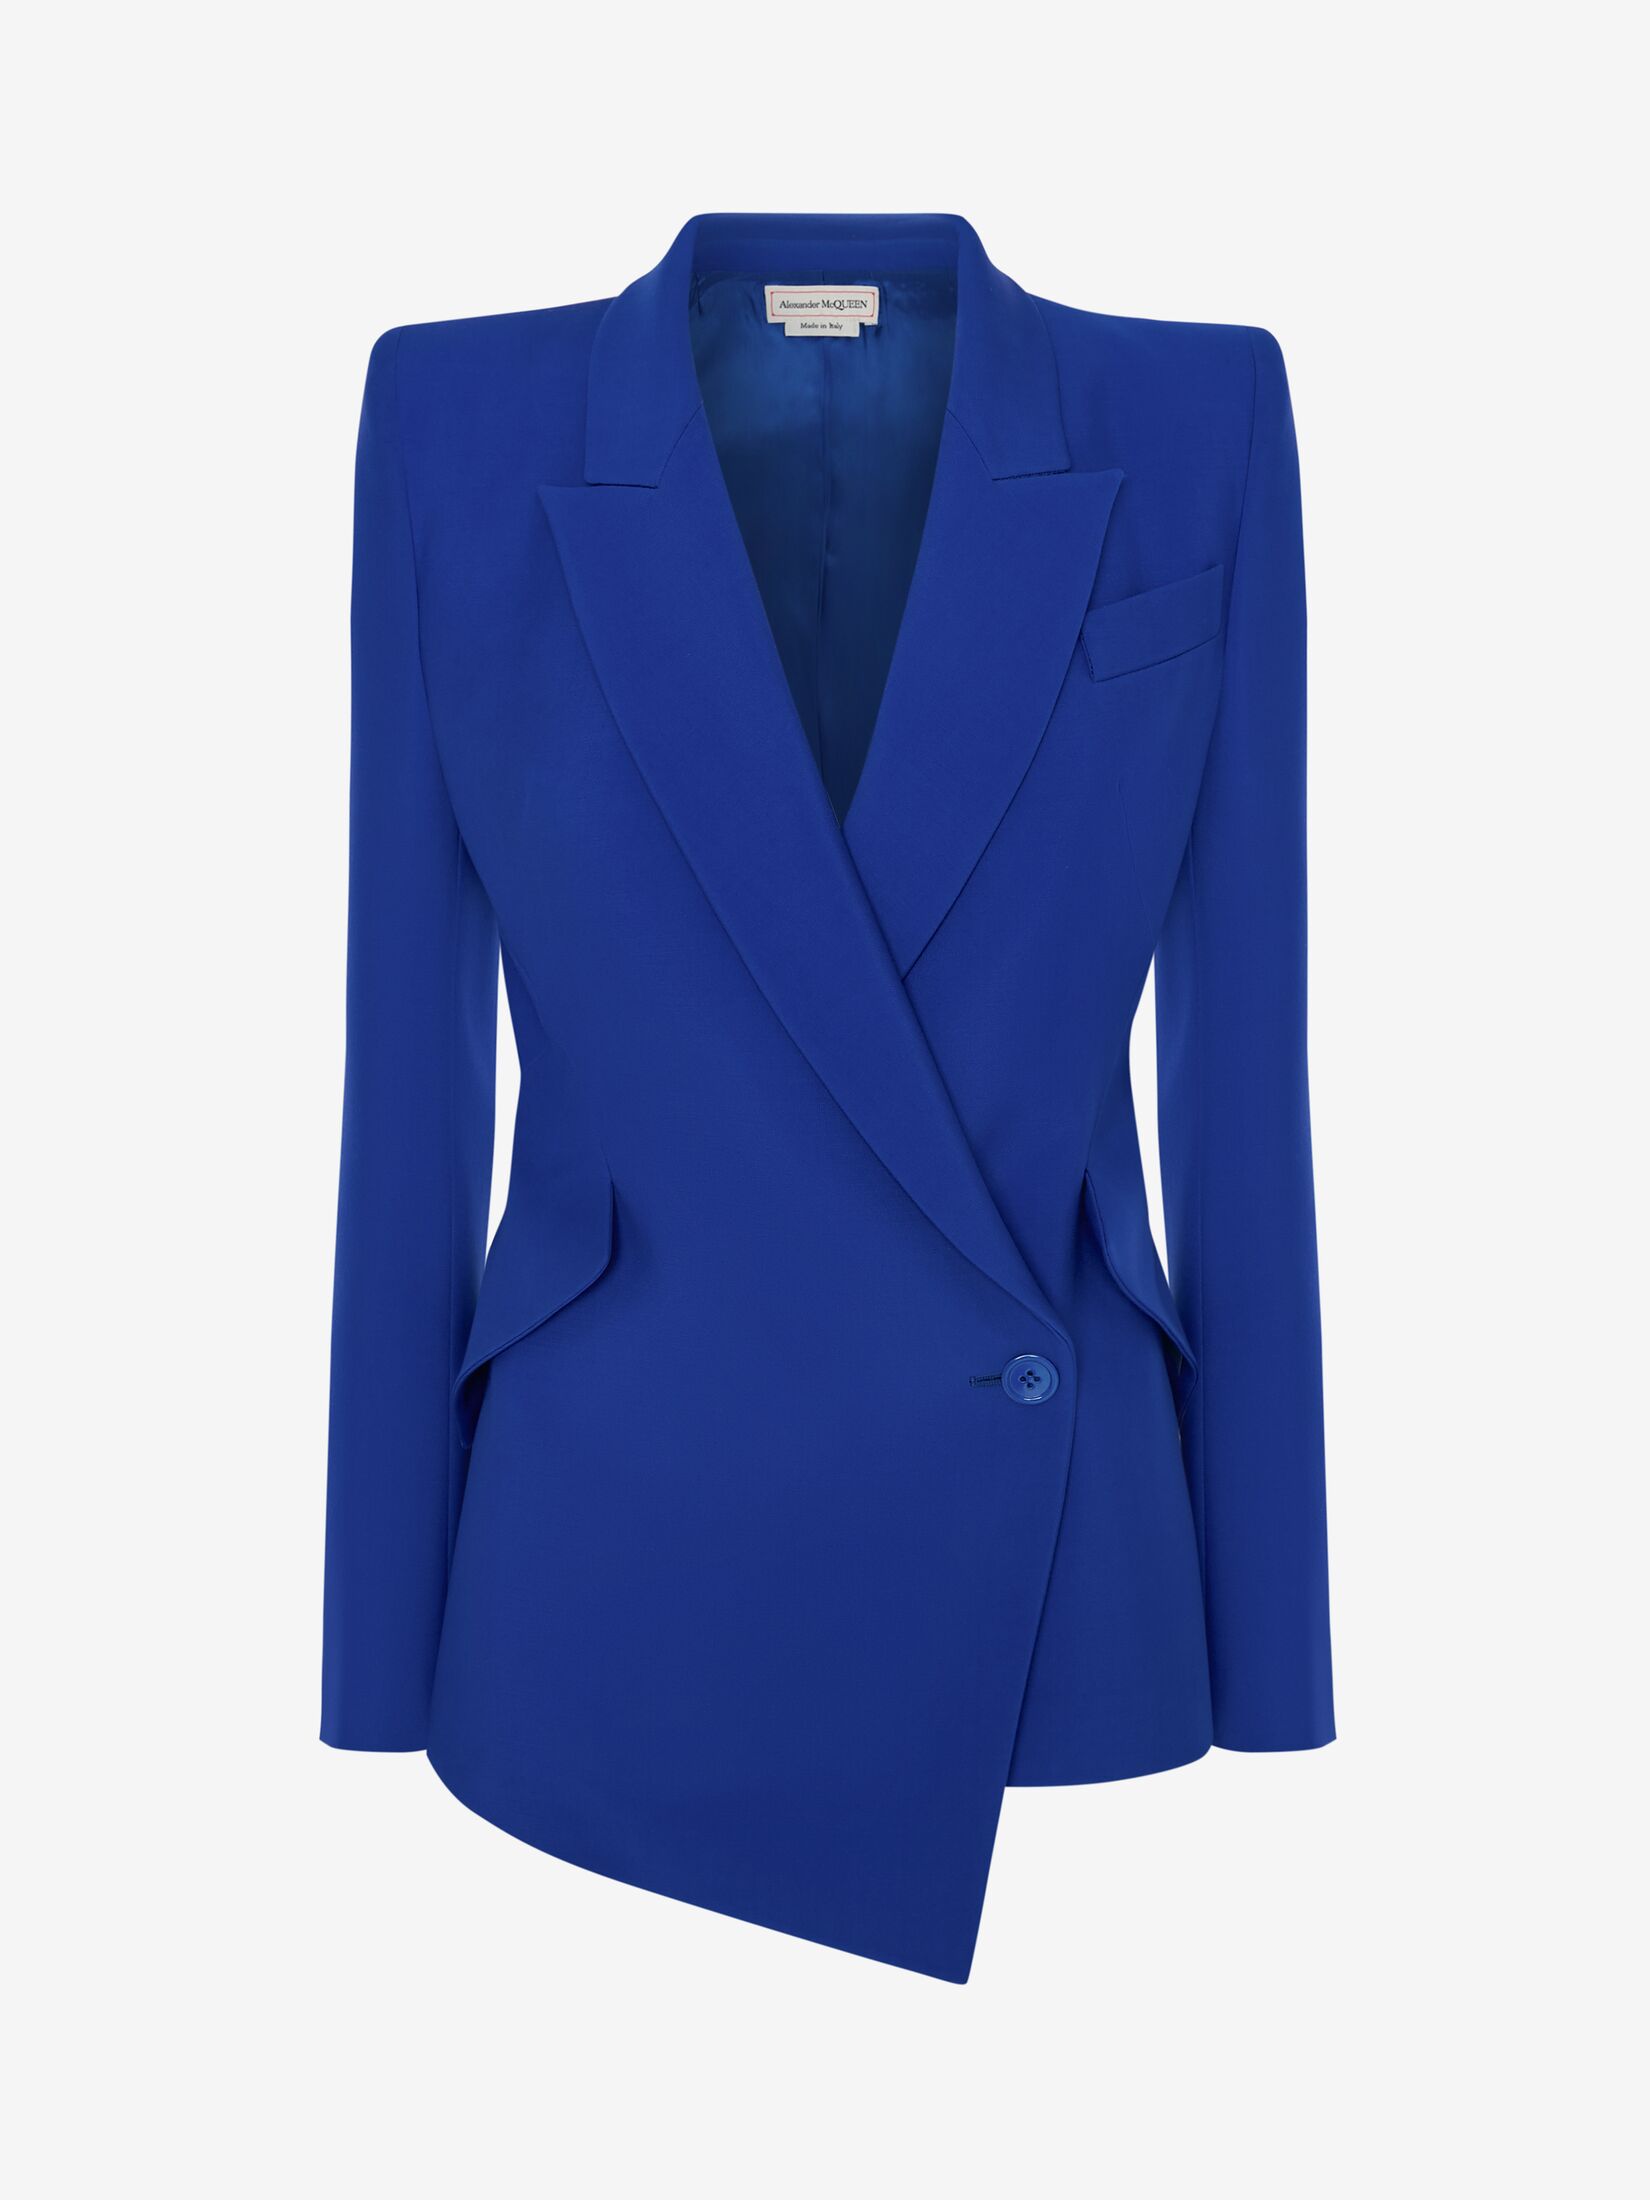 Women's Women's Tailoring | Jackets & Tuxedo | Alexander McQueen GB